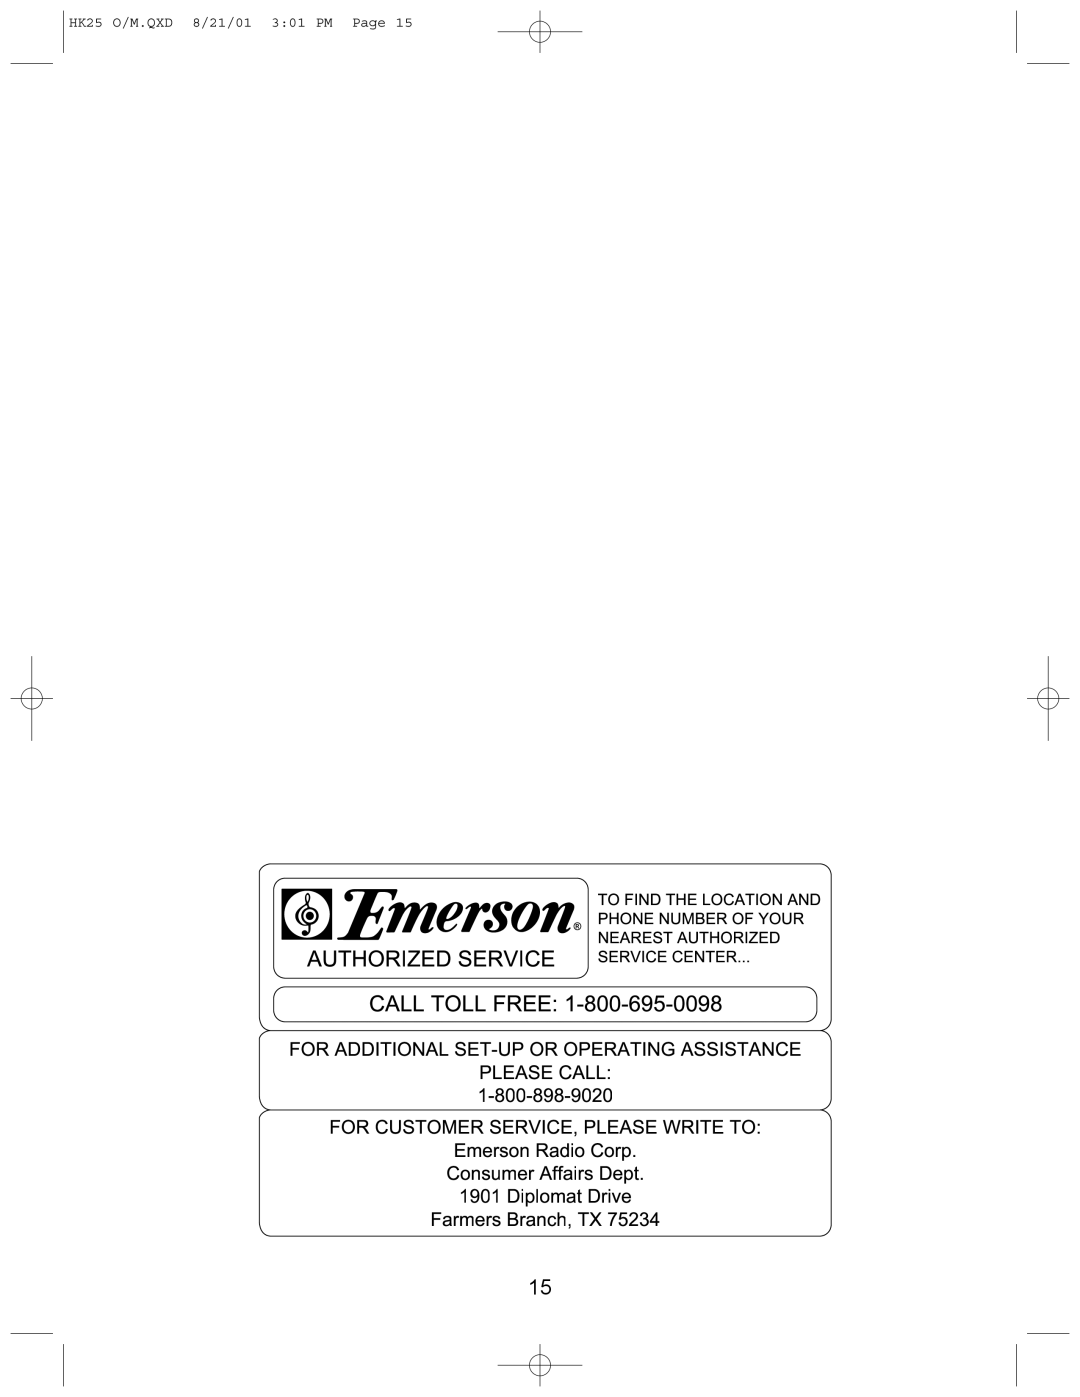 Emerson HK25 user service Consumer1901DiplomatAffairsDrive, FarmersBranch,TX75234 